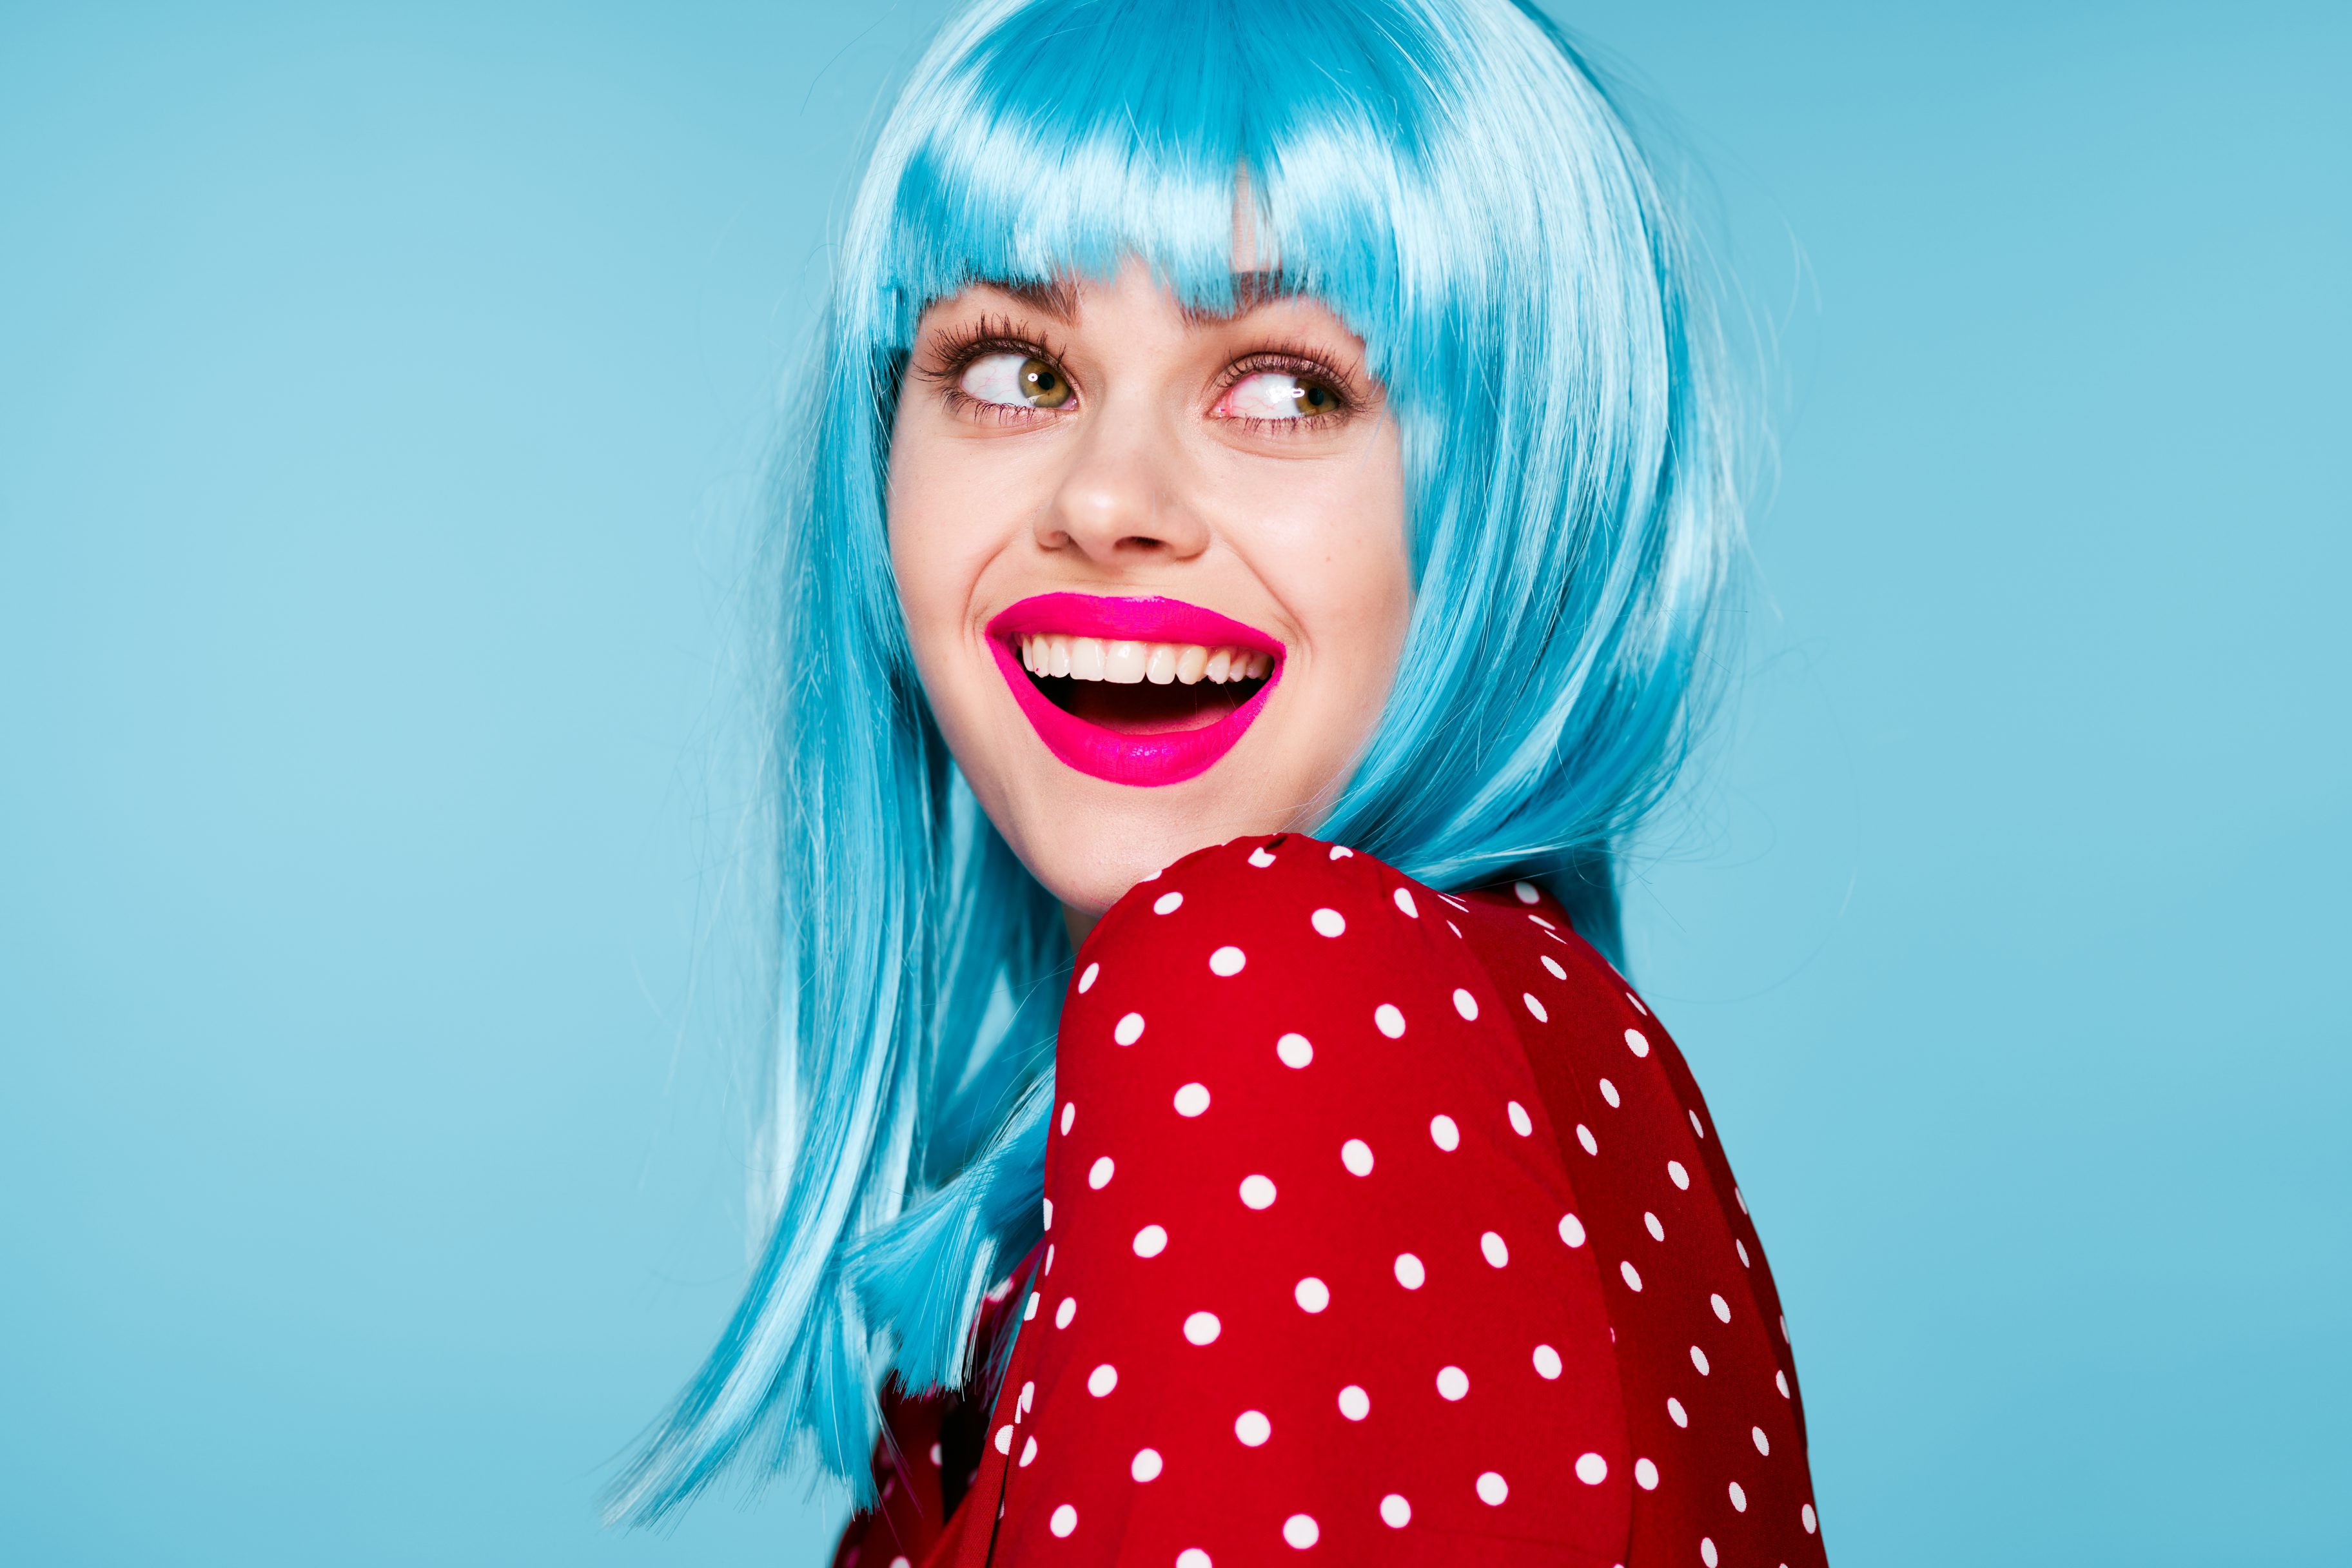 7. "25 Gorgeous Light Blue Hair Color Ideas for Women" - wide 4